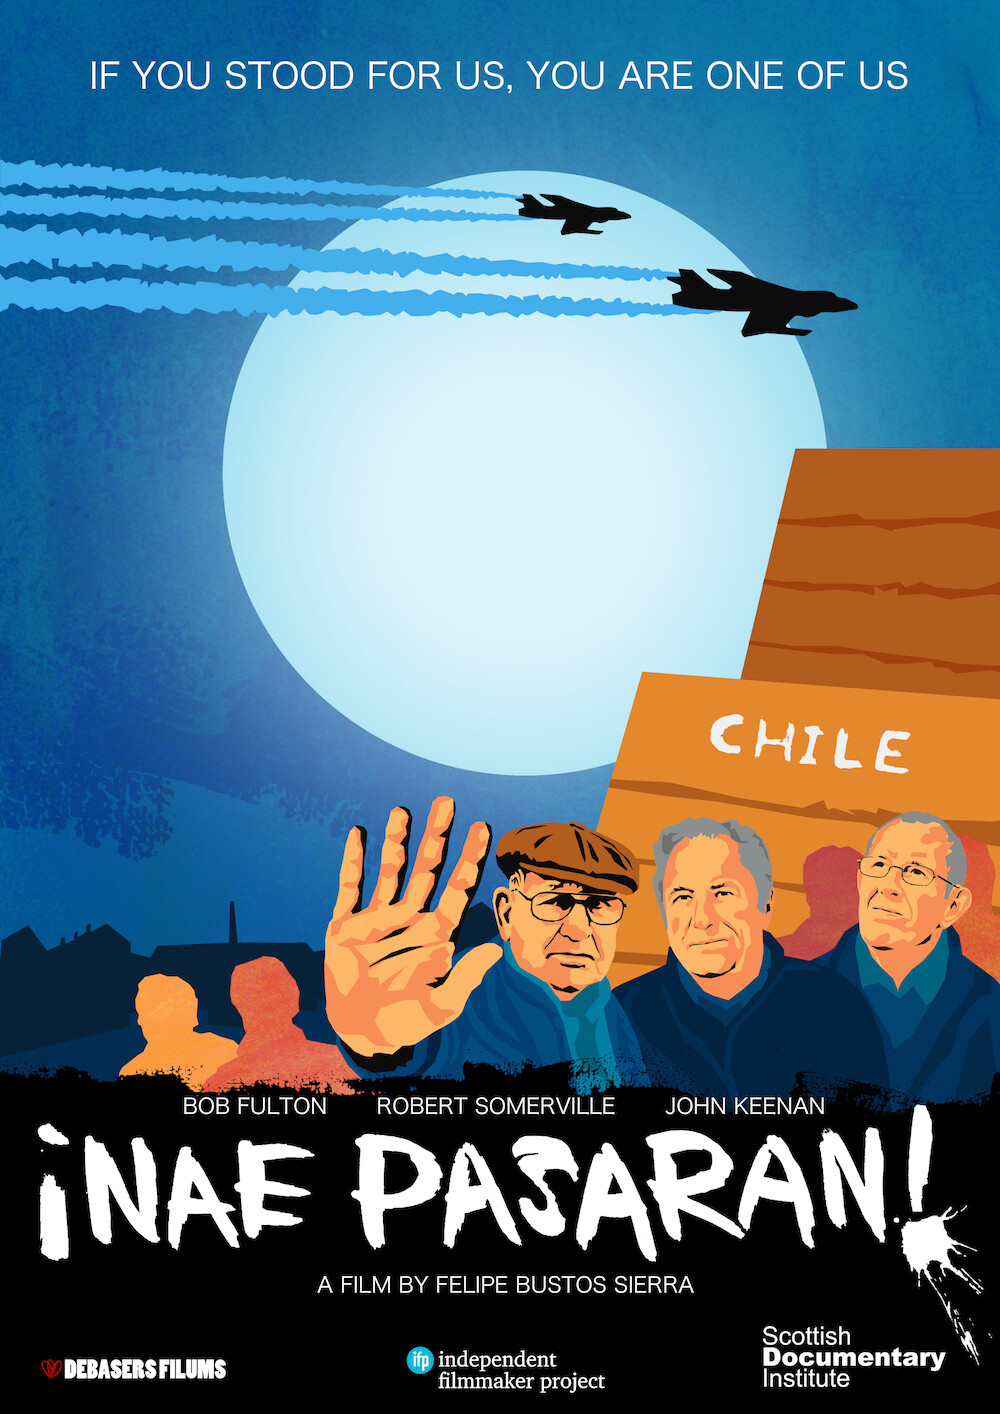 Original NAE PASARAN poster (crowdfunding campaign) - Moon